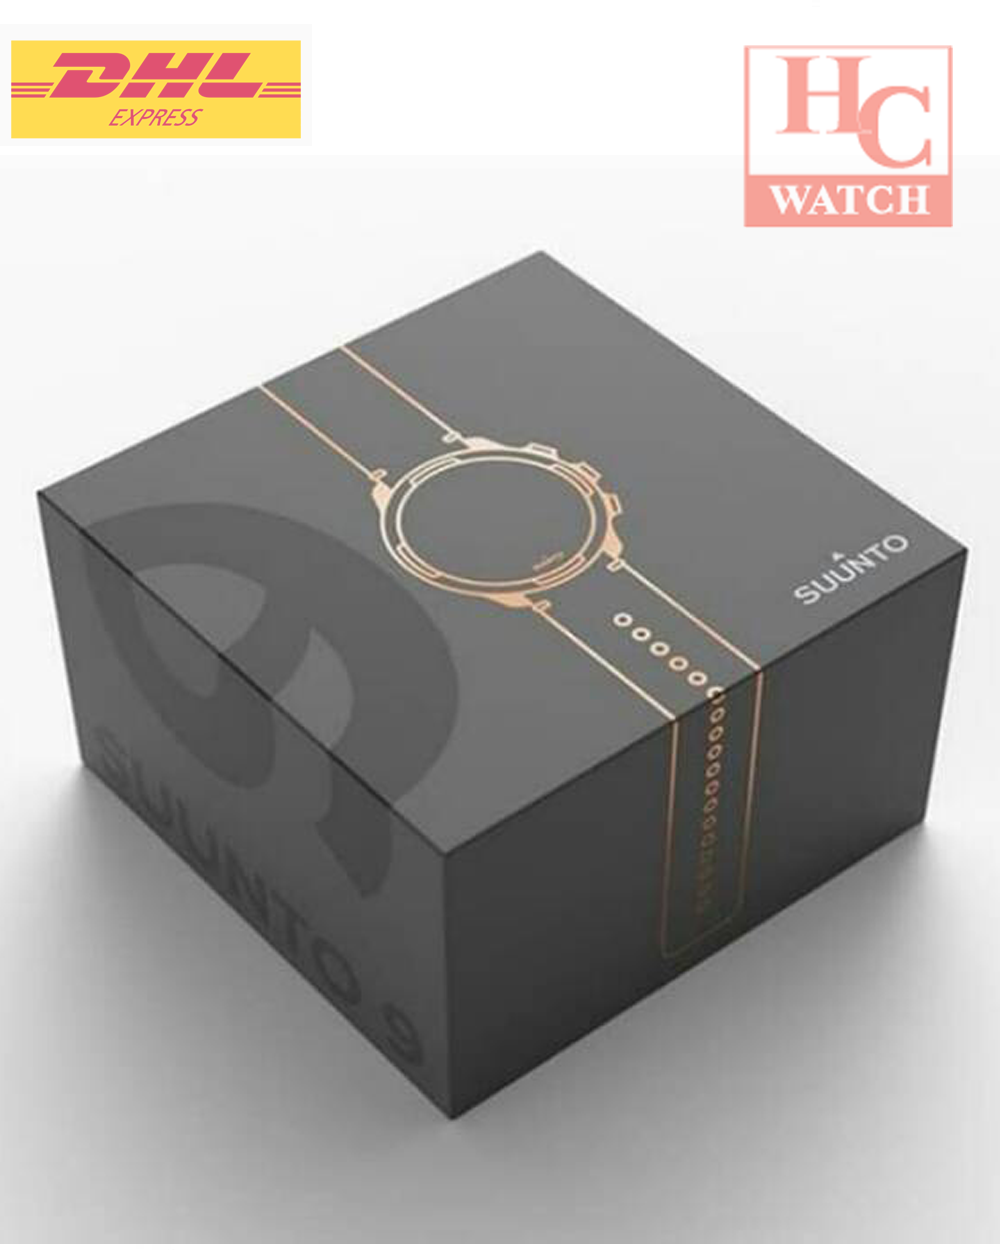 New SUUNTO 9 BARO Titanium Ambassador Edition  Sapphire Crystal Watch